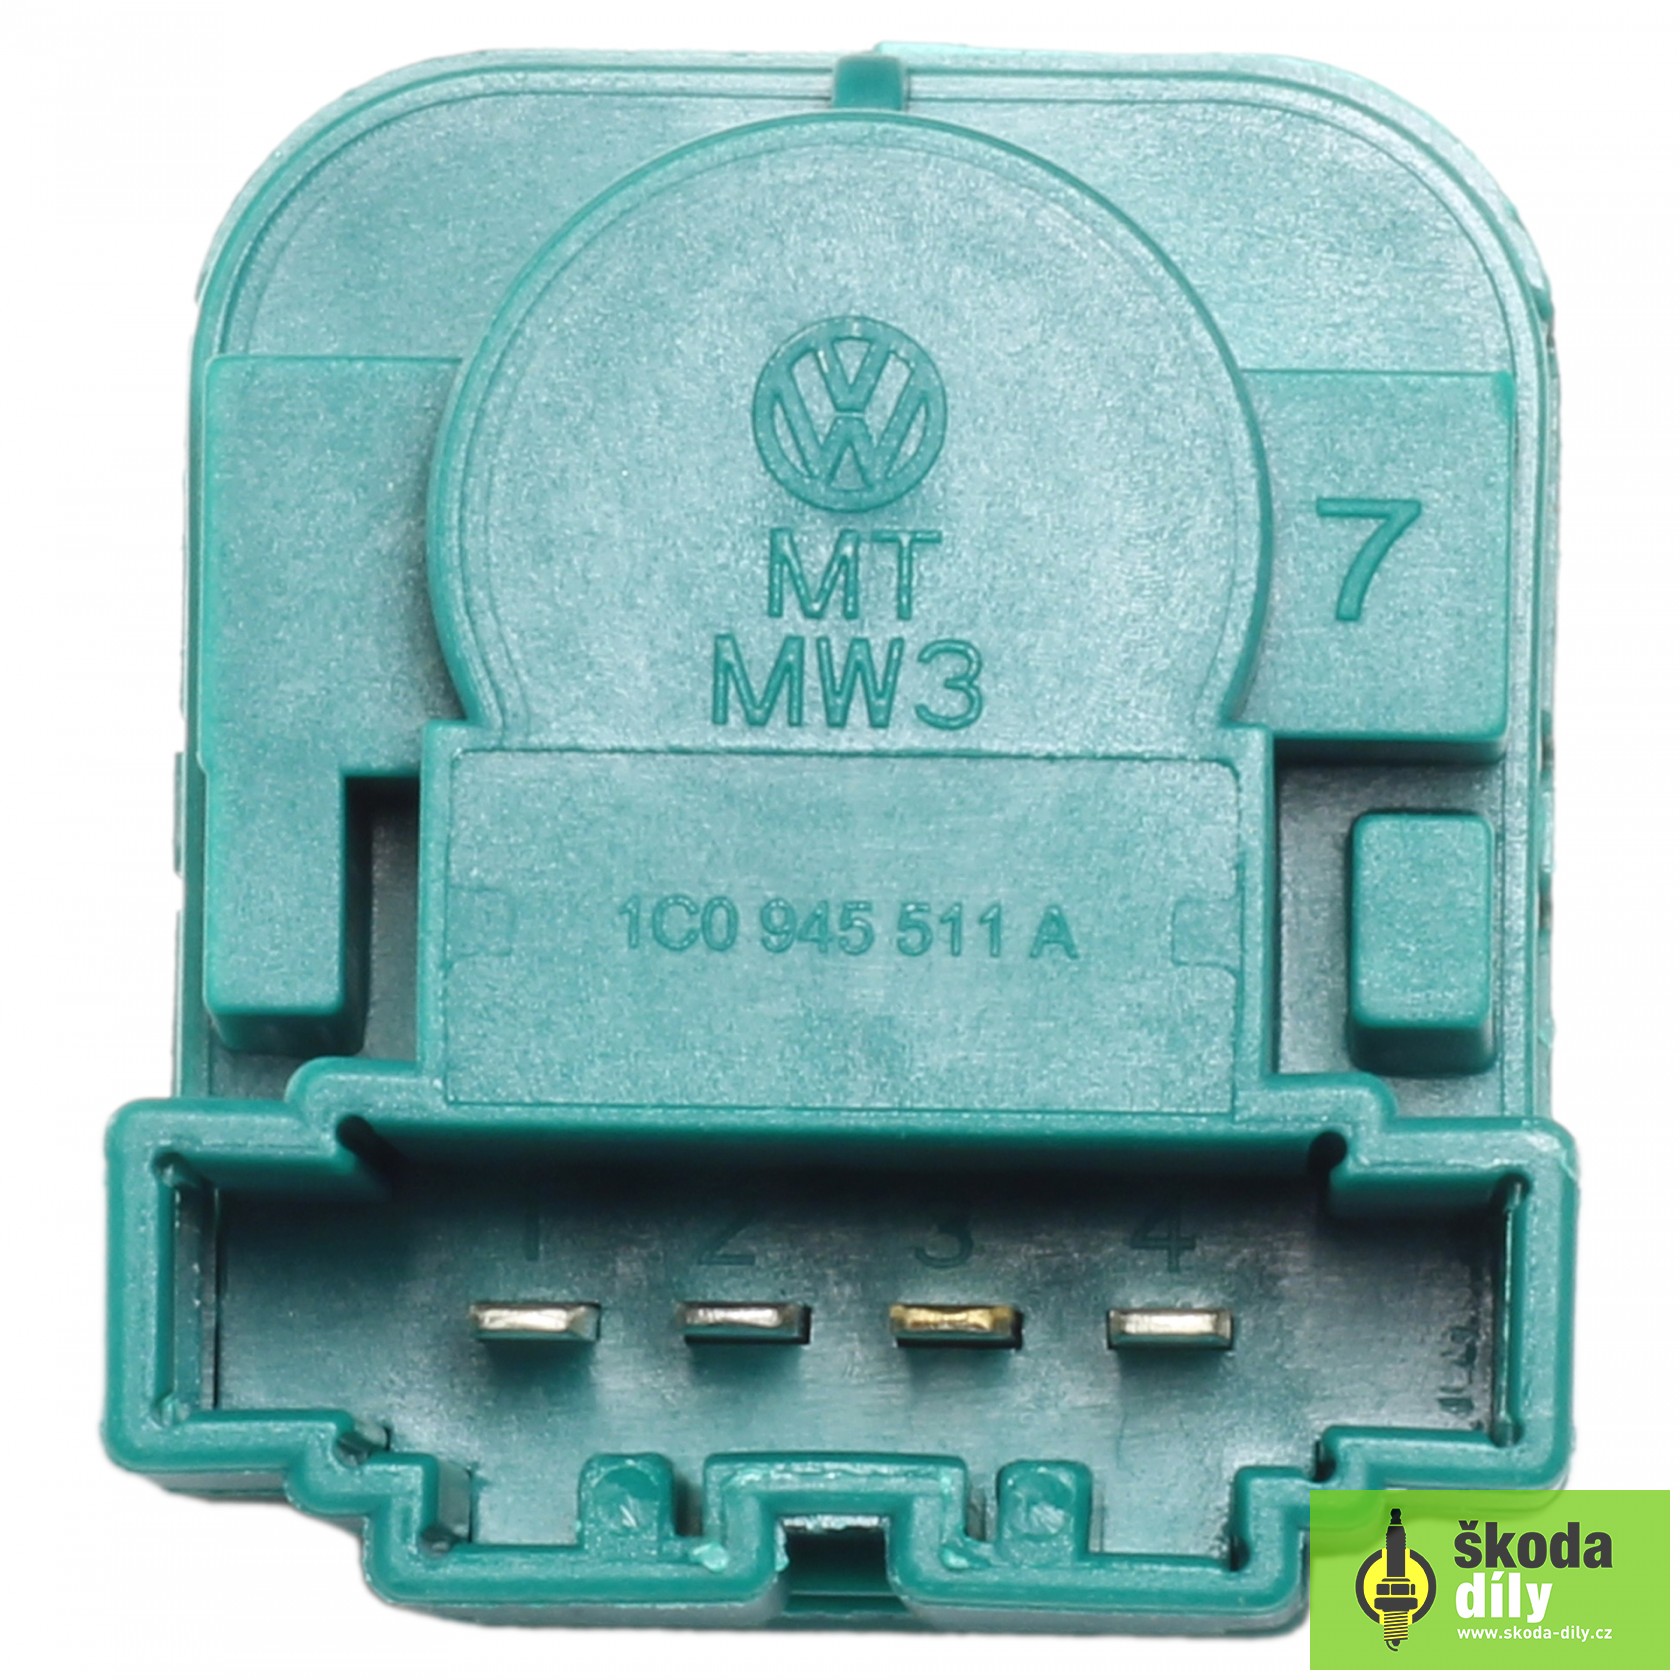 1x Brake Light Switch Button For VW Audi Skoda Seat OEM 1C0 945